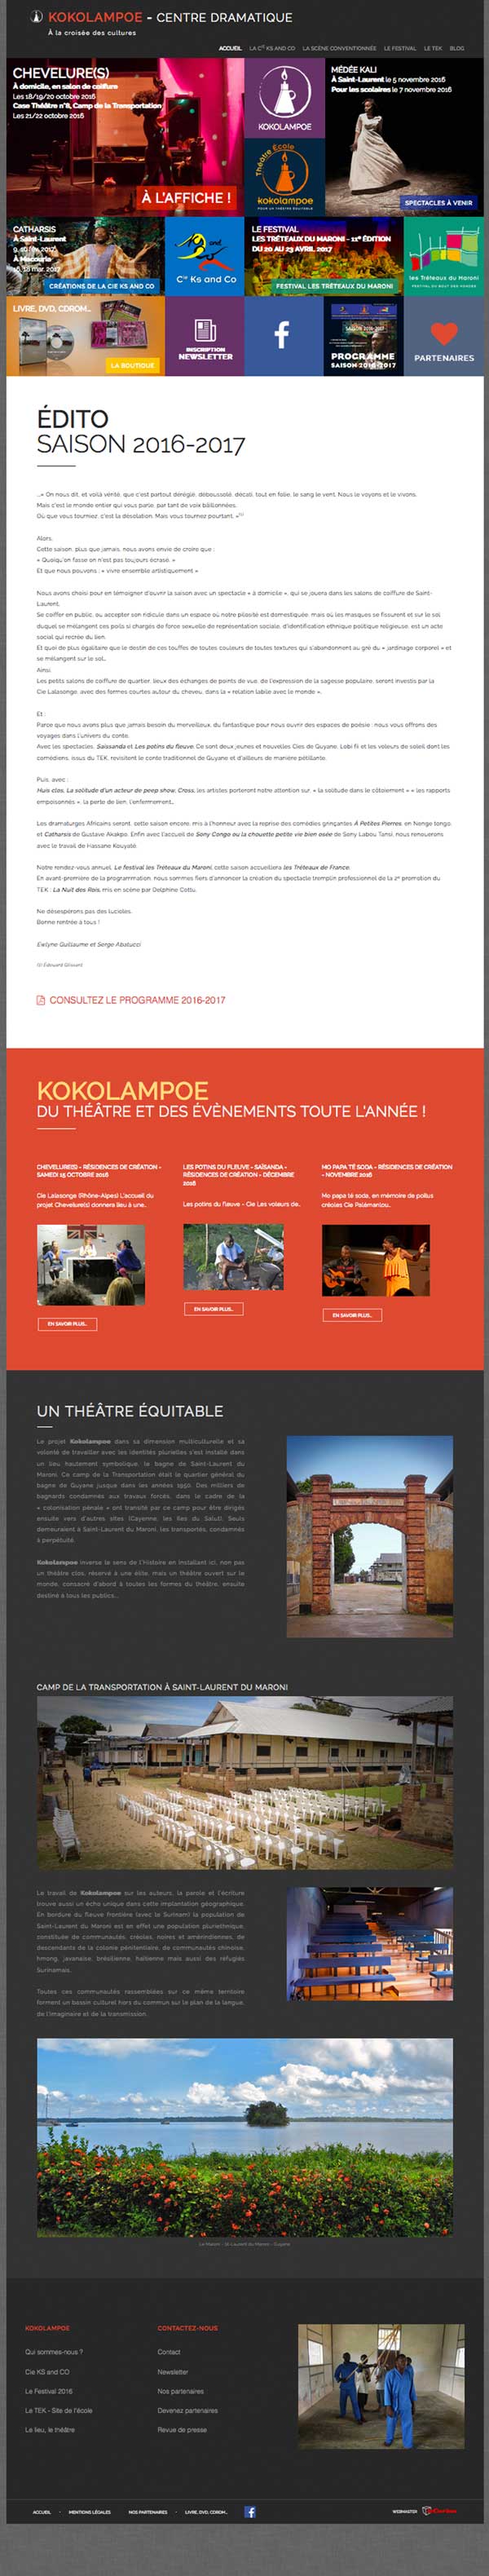 kokolampoe-site-homepage-entier